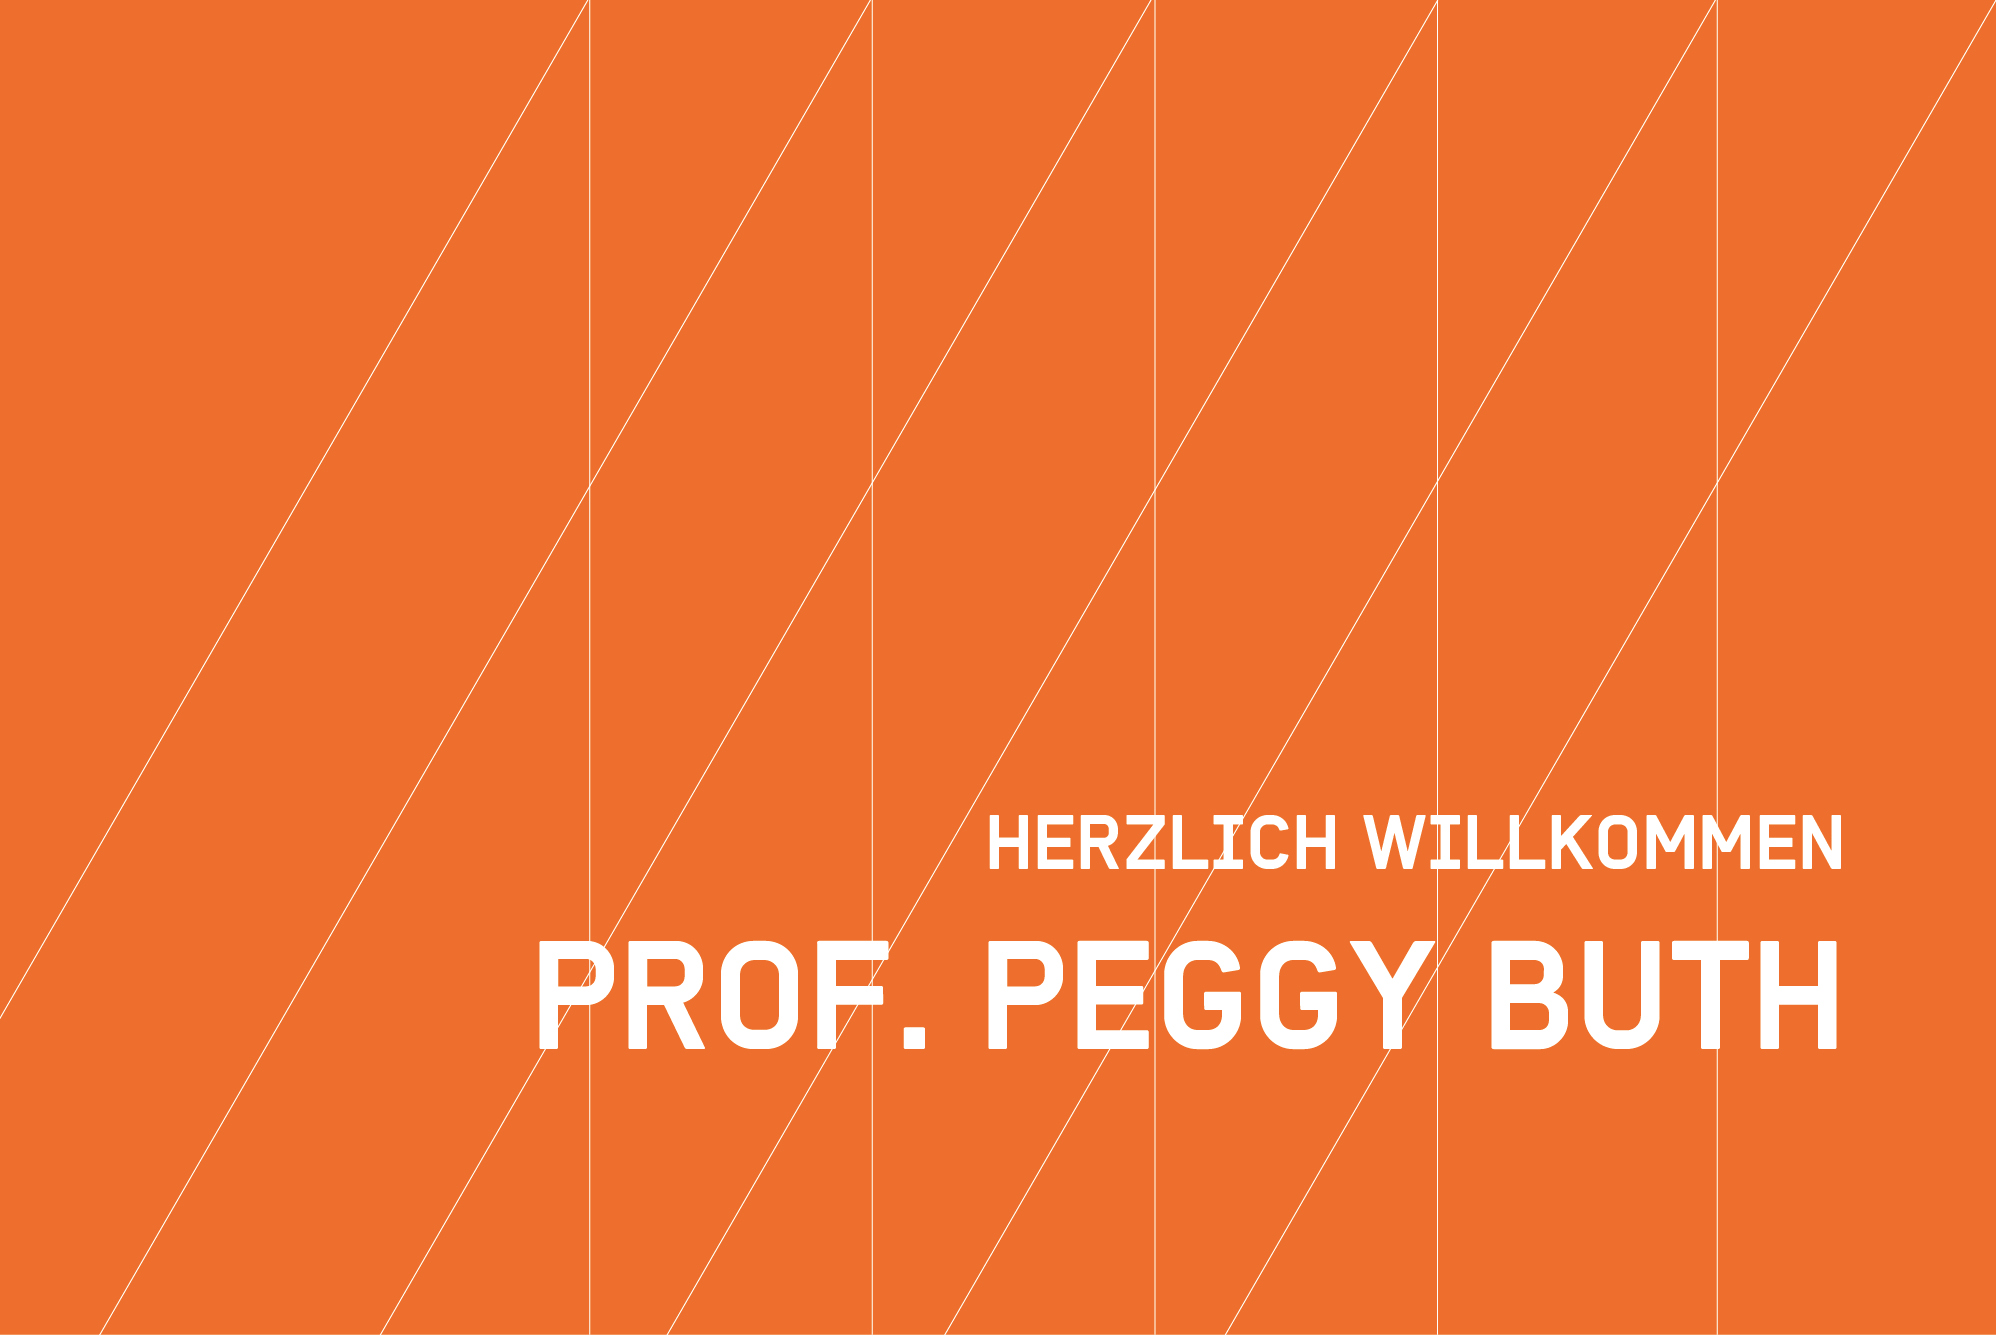 Peggy Buth erhält Fotografie-Professur an der Kunsthochschule Kassel